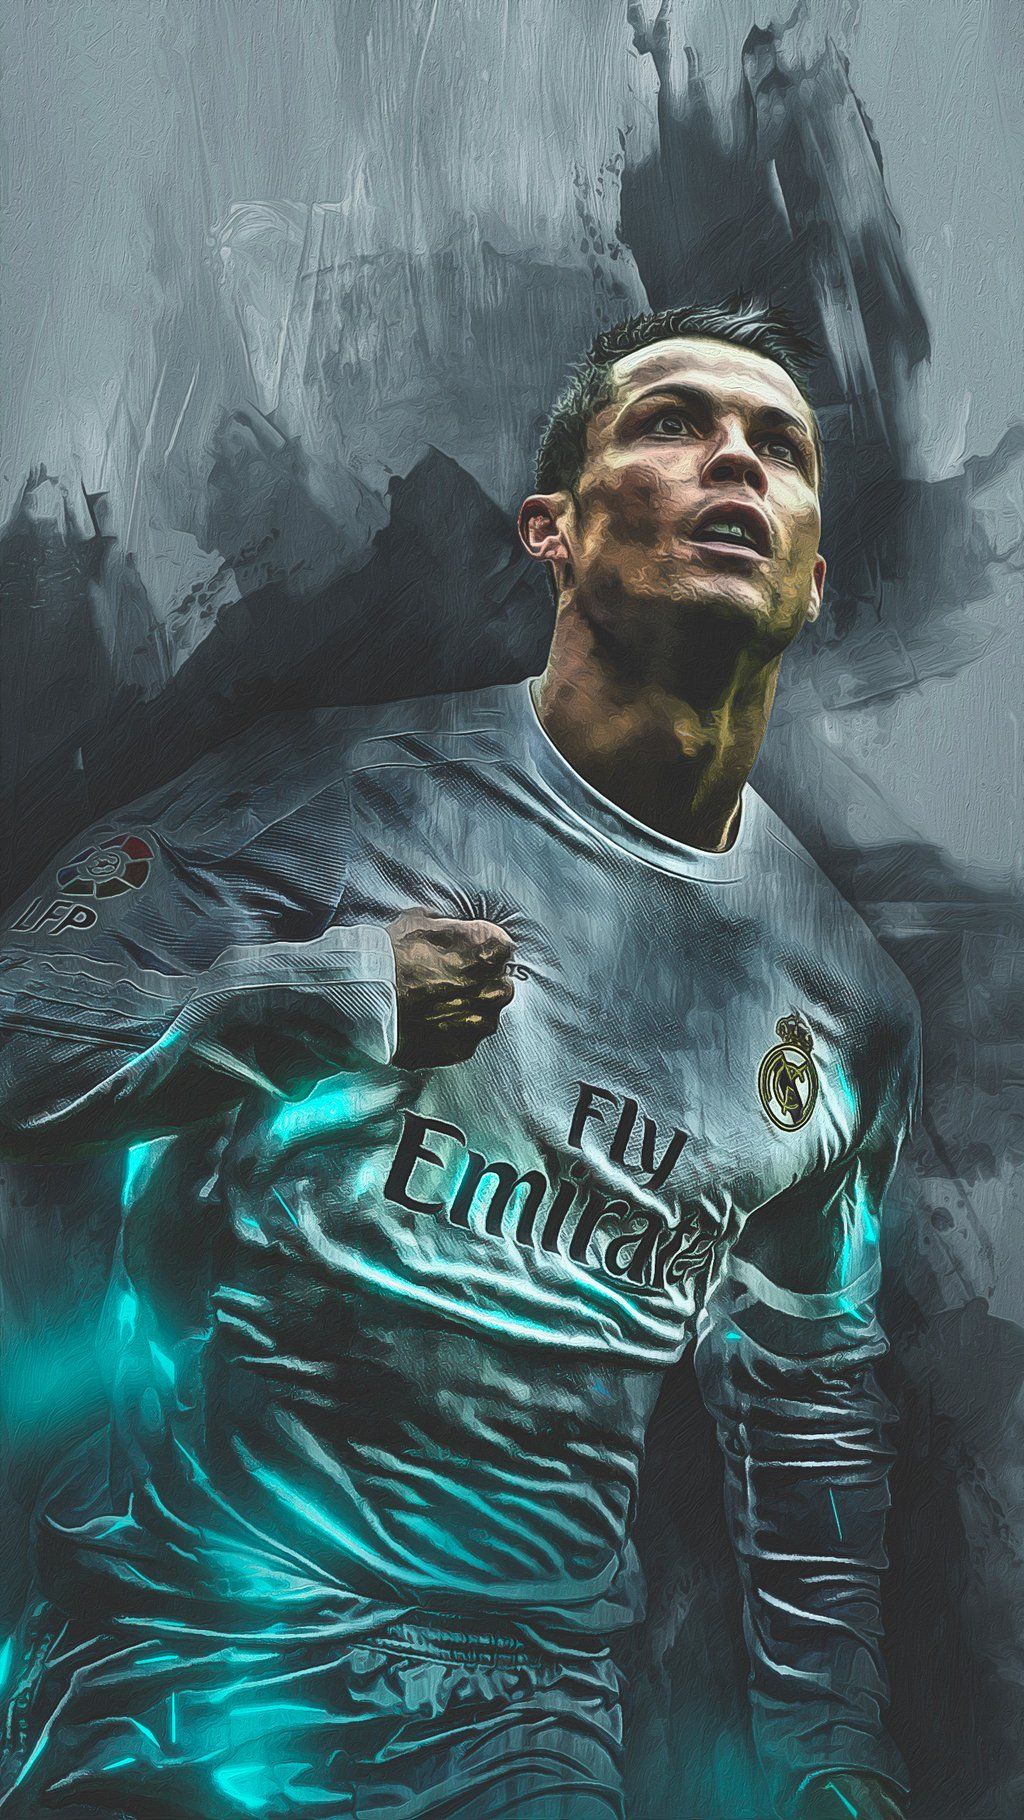 Cristiano Ronaldo Phone Wallpapers